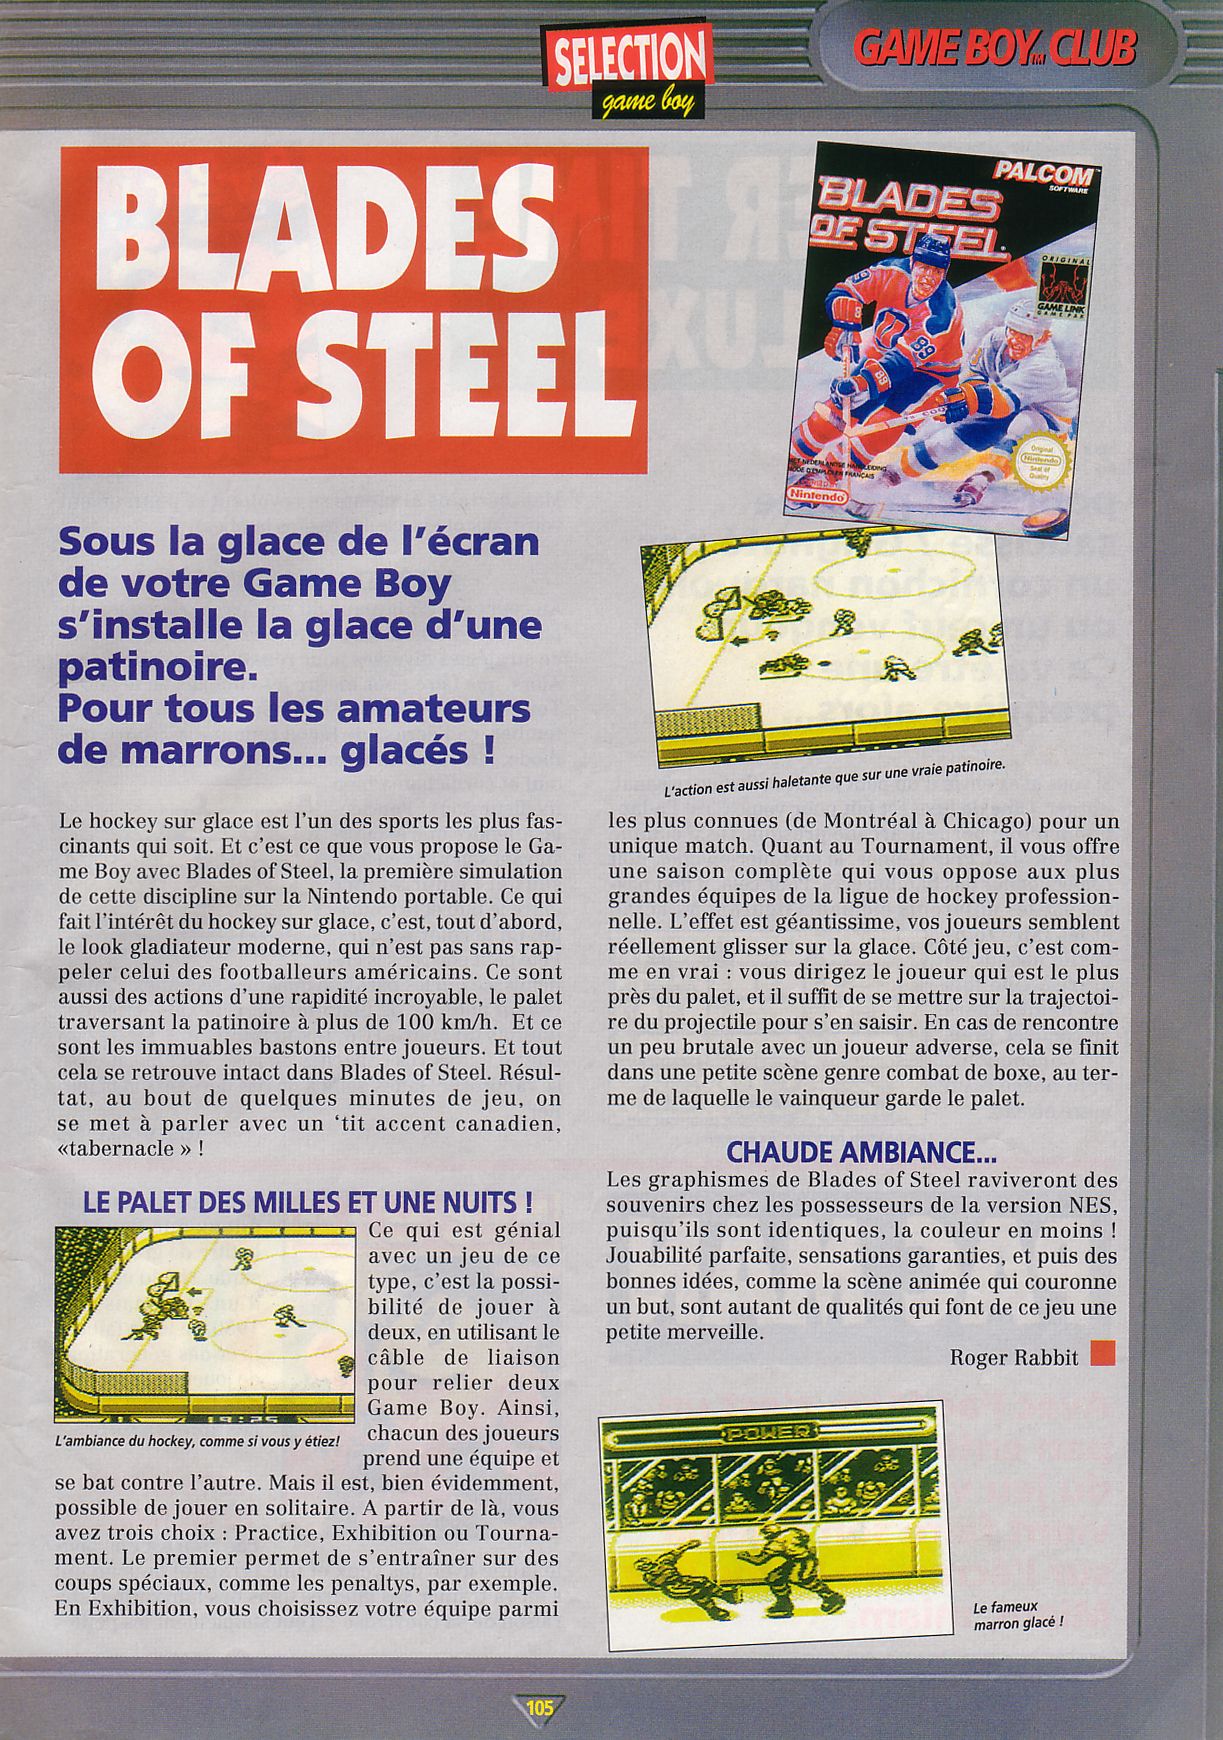 tests//1283/Nintendo Player 005 - Page 105 (1992-07-08).jpg